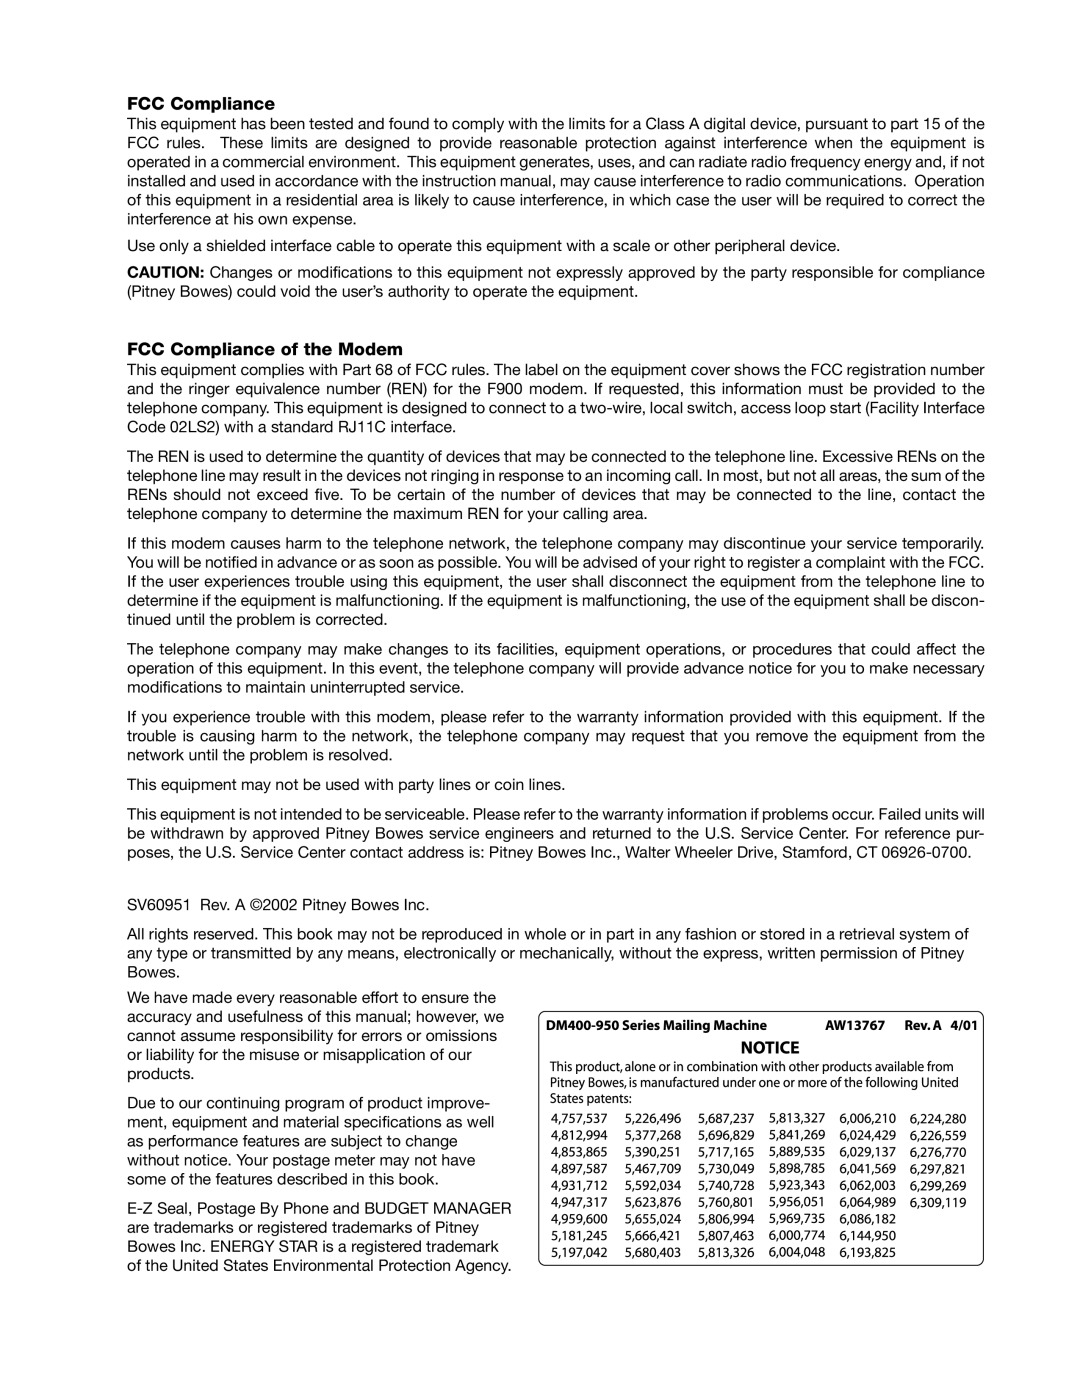 Pitney Bowes DM1000 manual FCC Compliance 